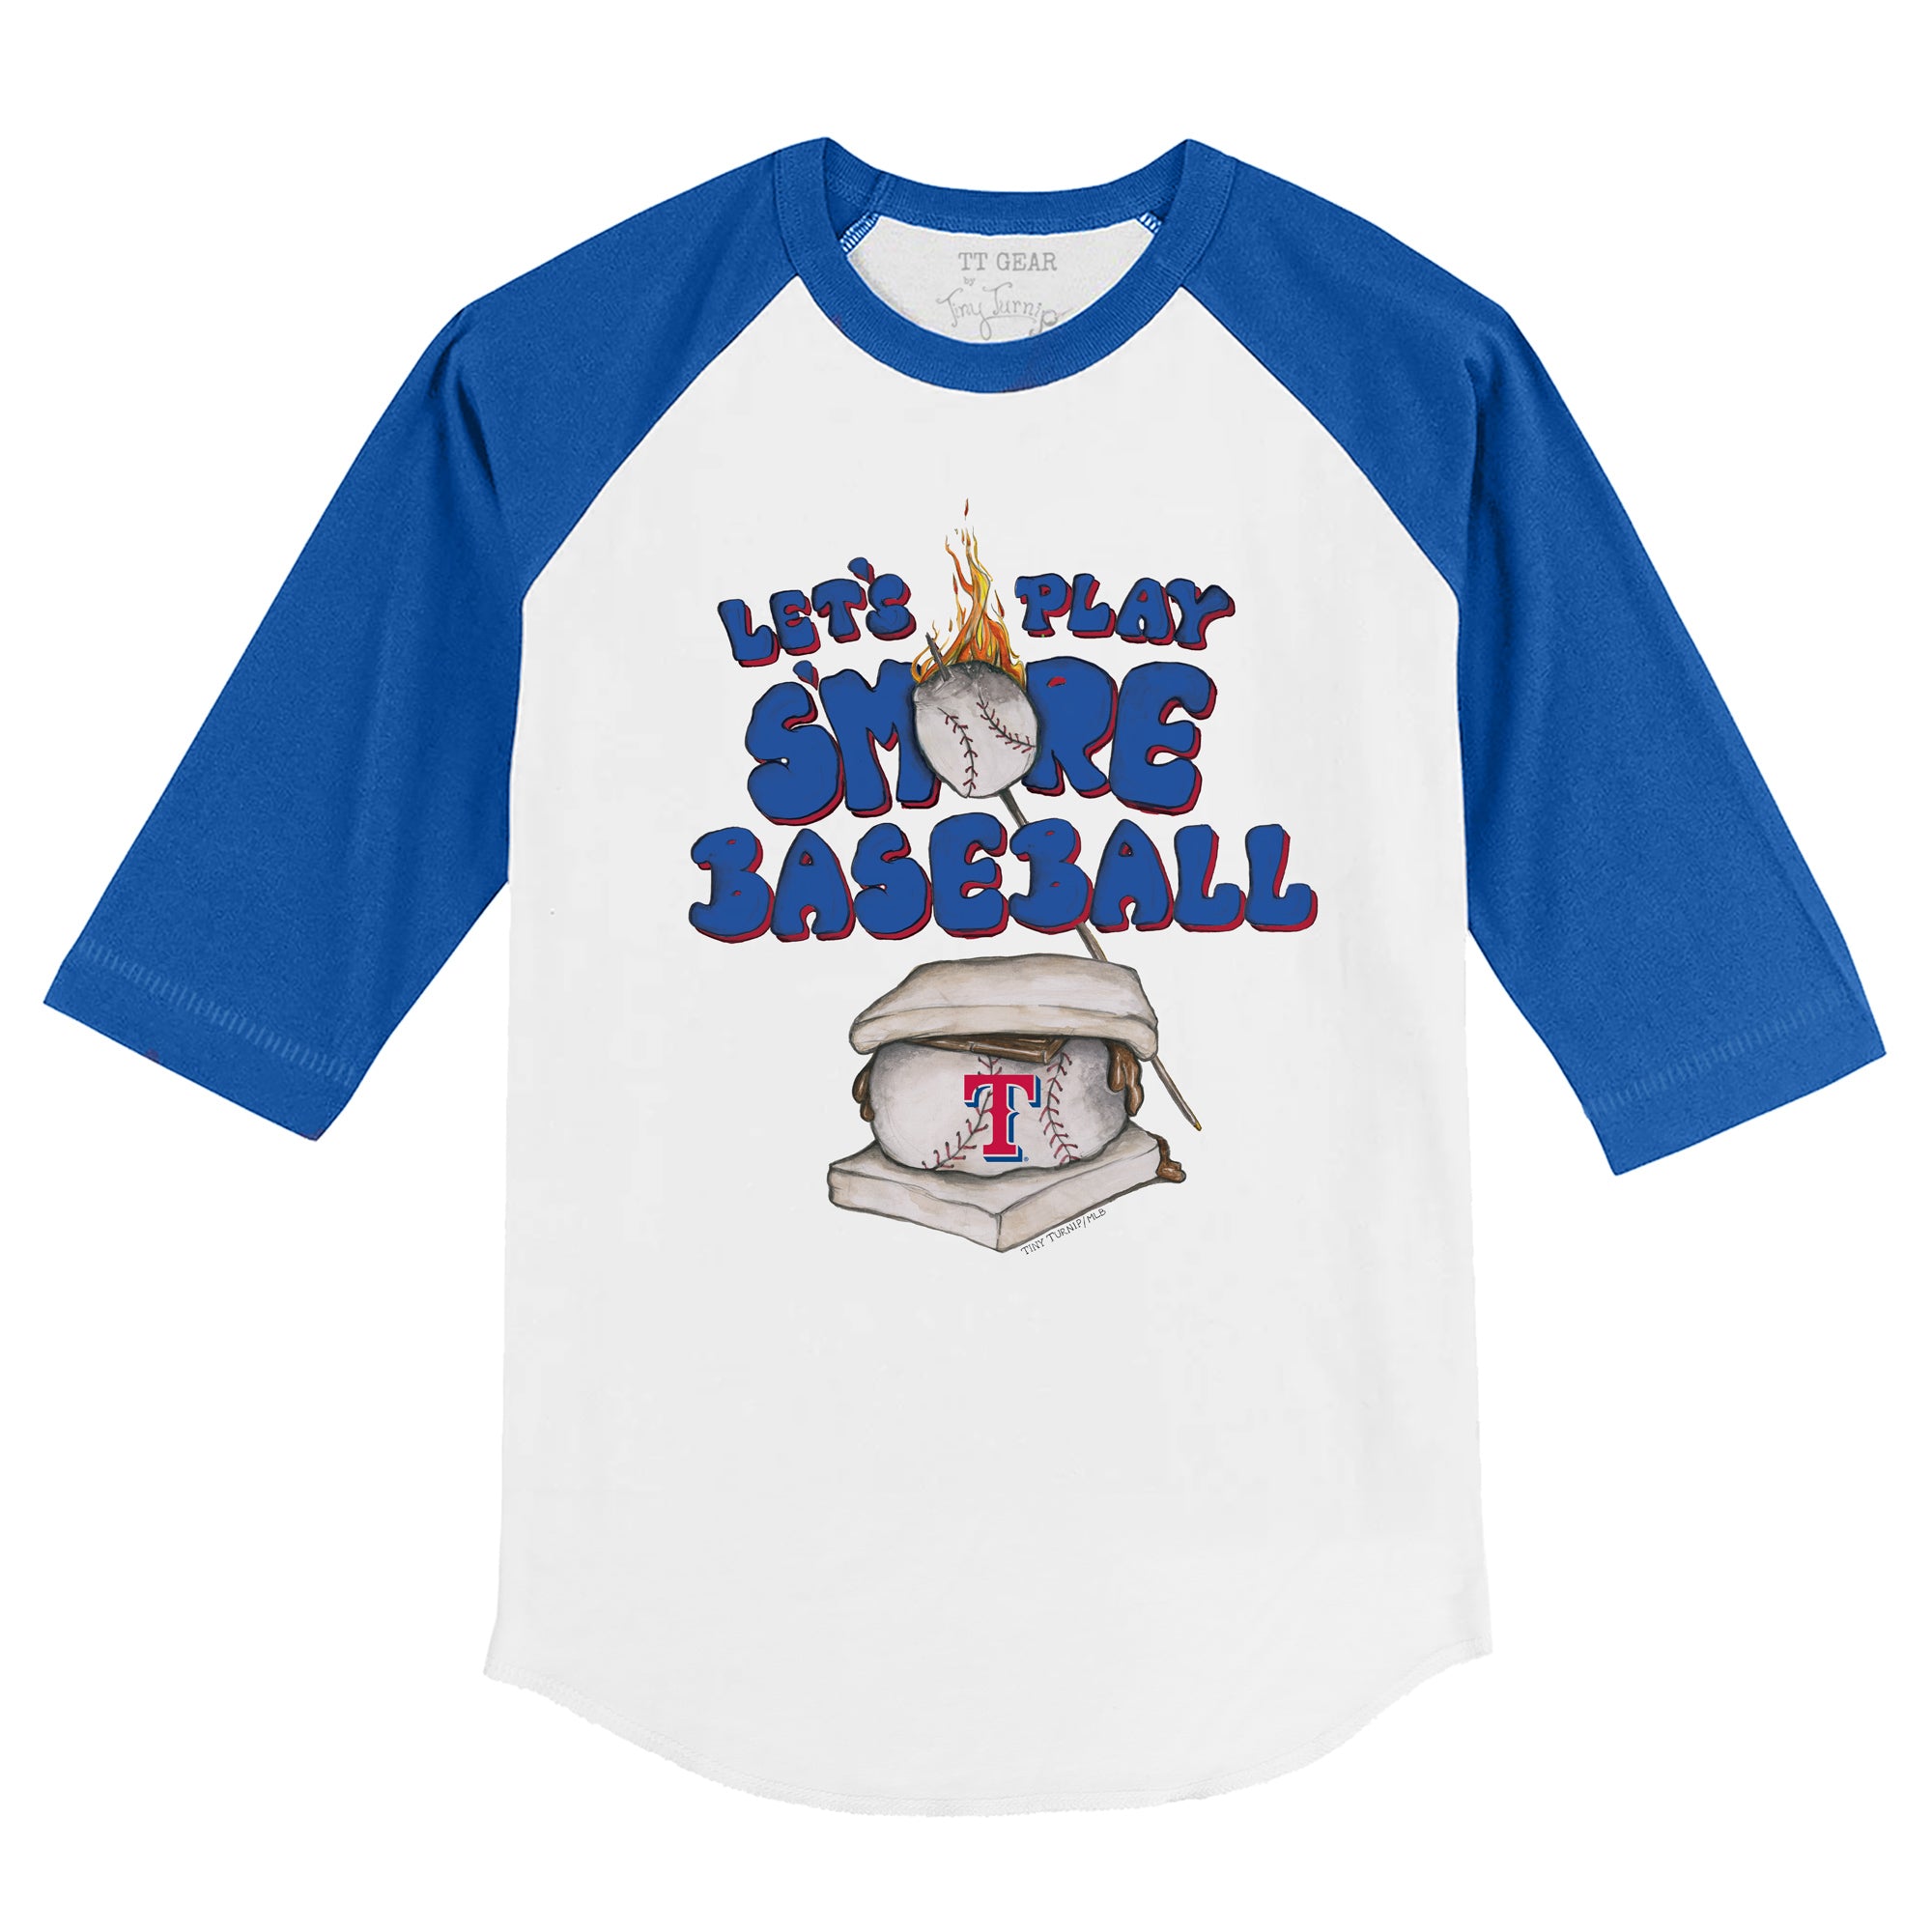 Toddler Tiny Turnip White Texas Rangers Baseball Babes T-Shirt